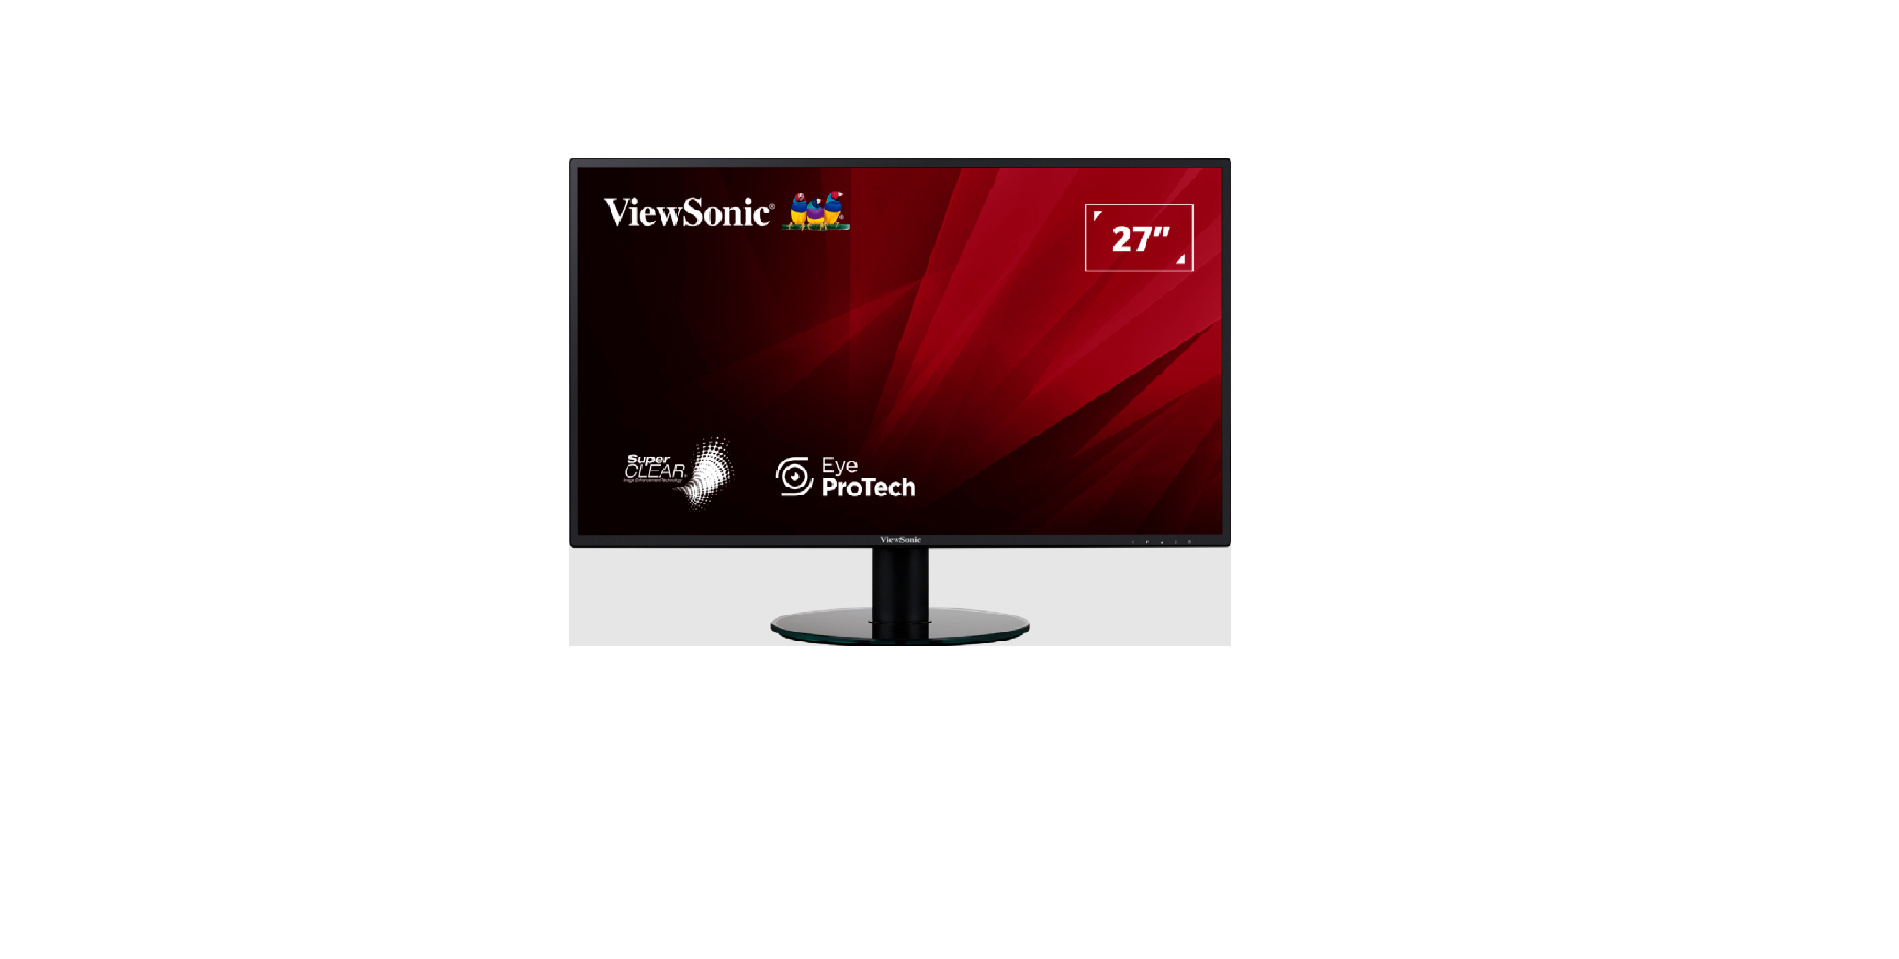 Viewsonic-VA2719-sh-27-1080p-Home-&-Office-Monitor-Feature